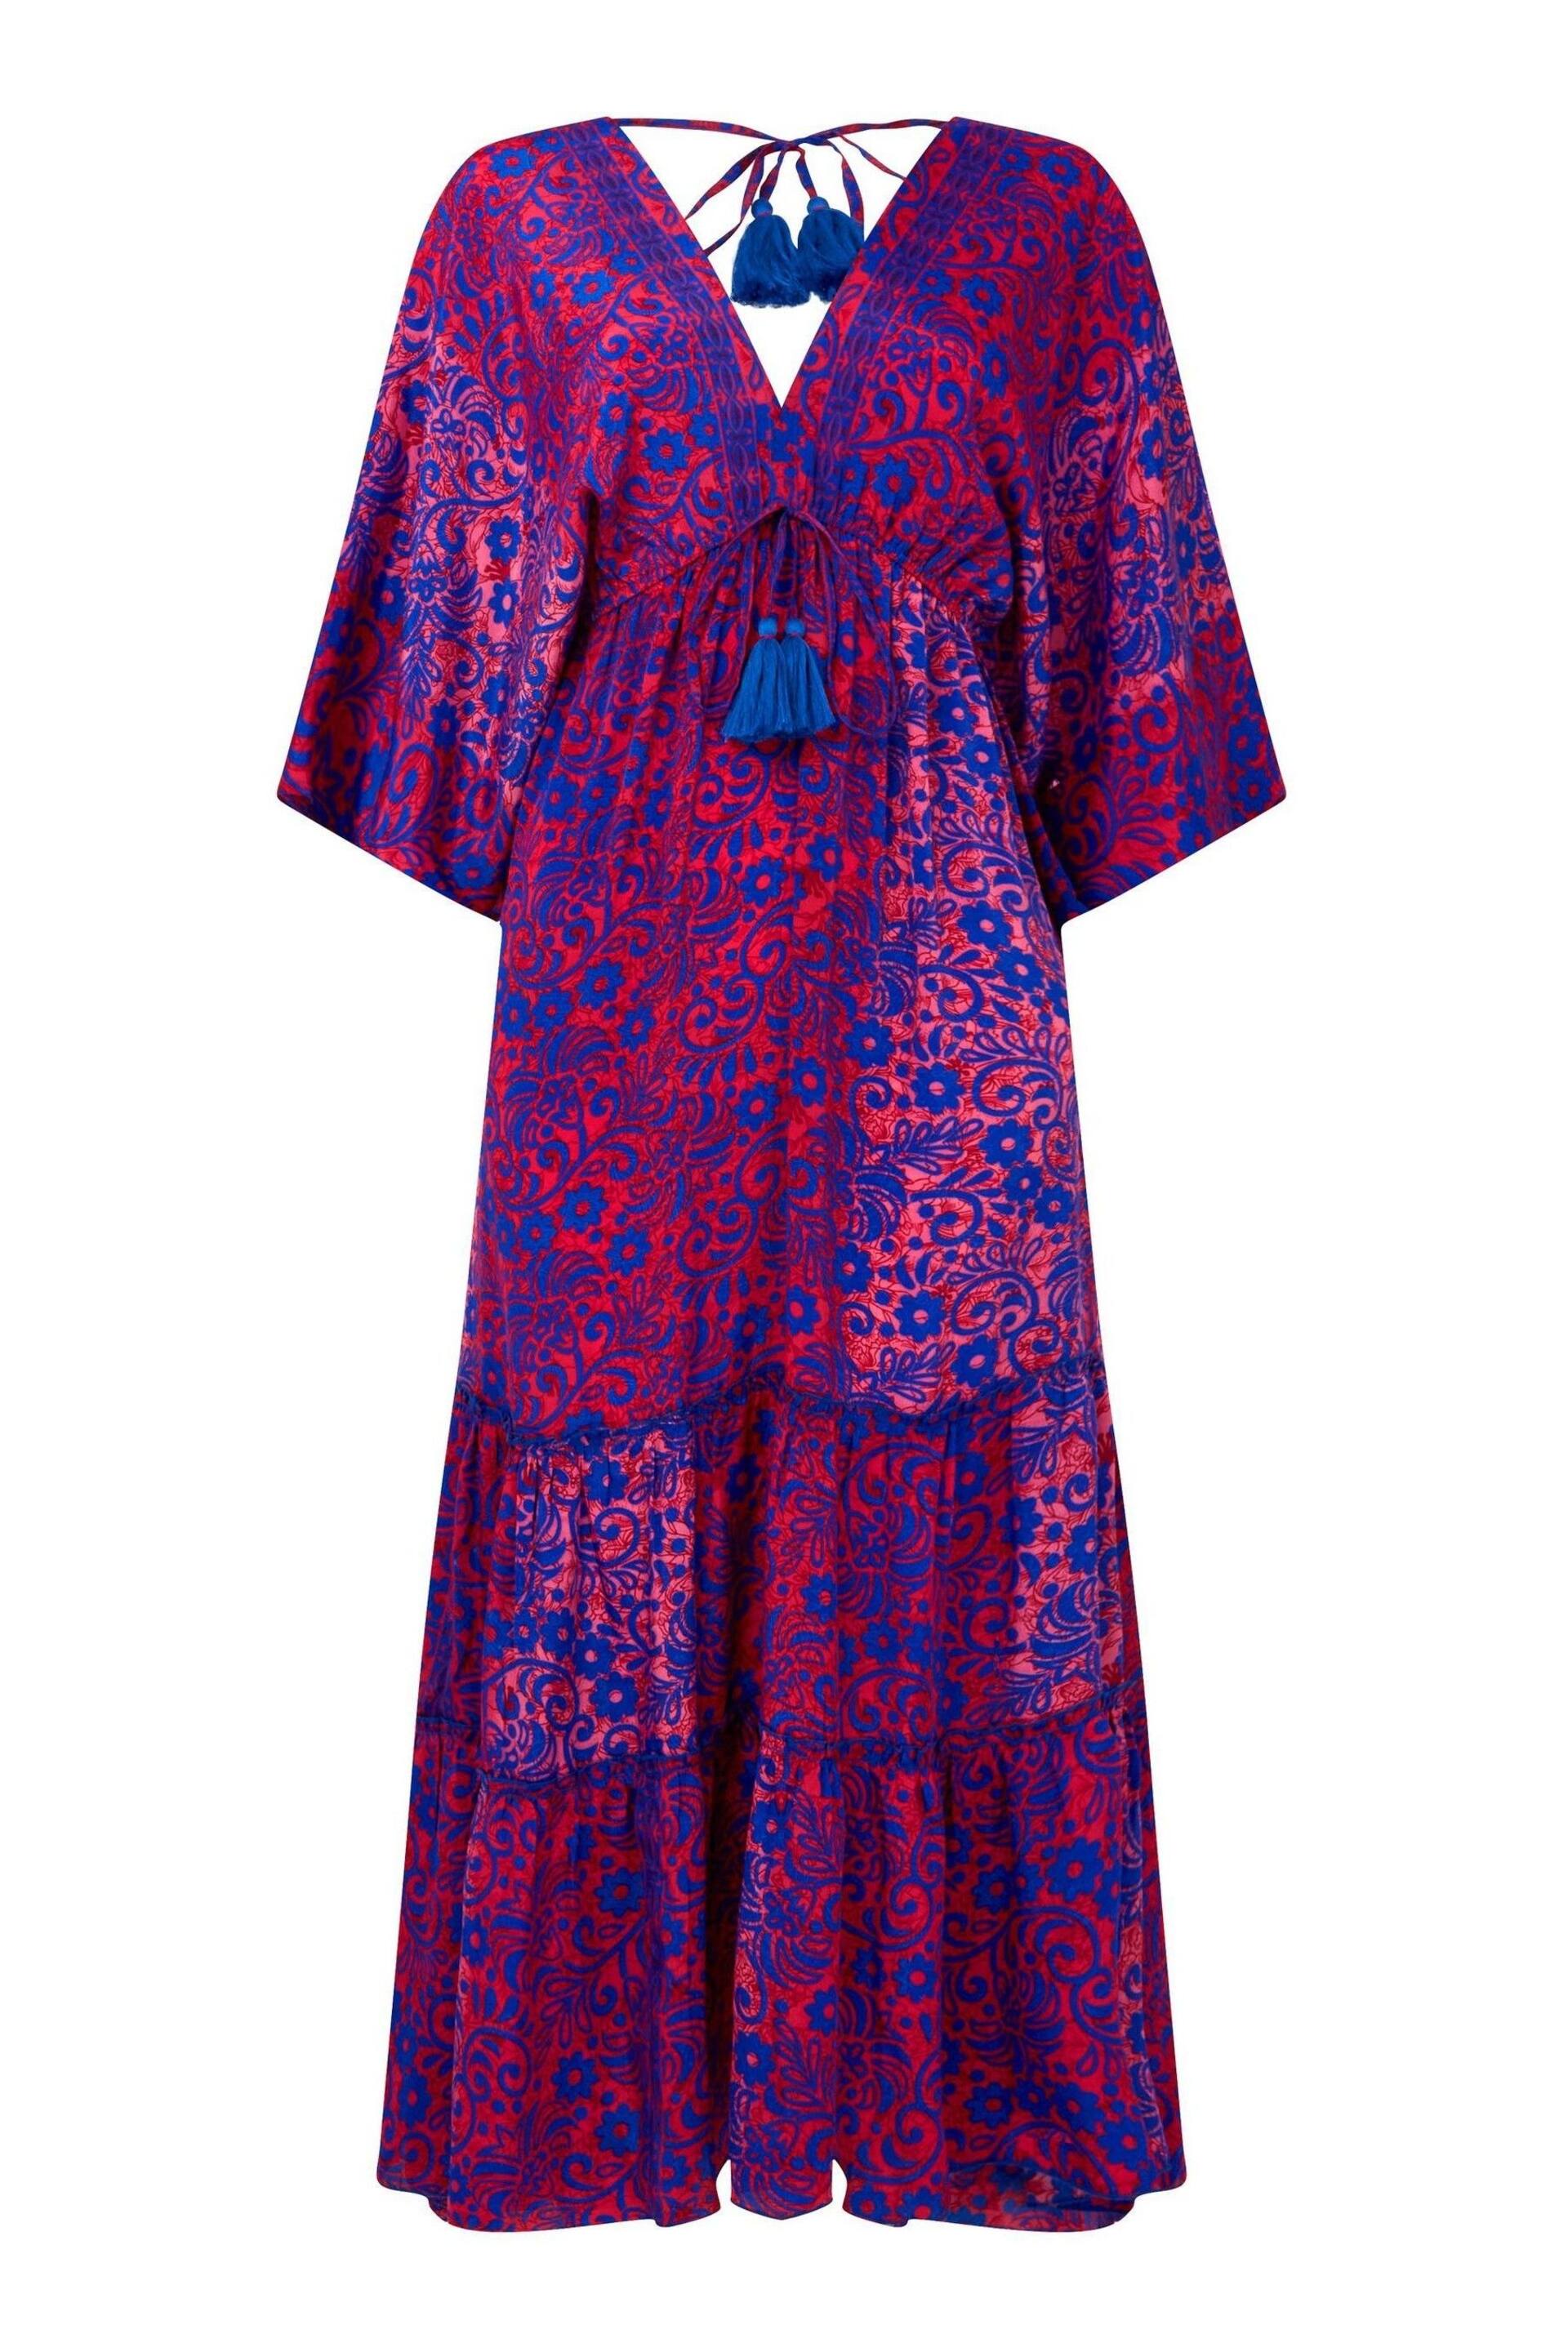 Joe Browns Pink Silky Vibrant Print Tassel Tie Tiered Maxi Dress - Image 7 of 7